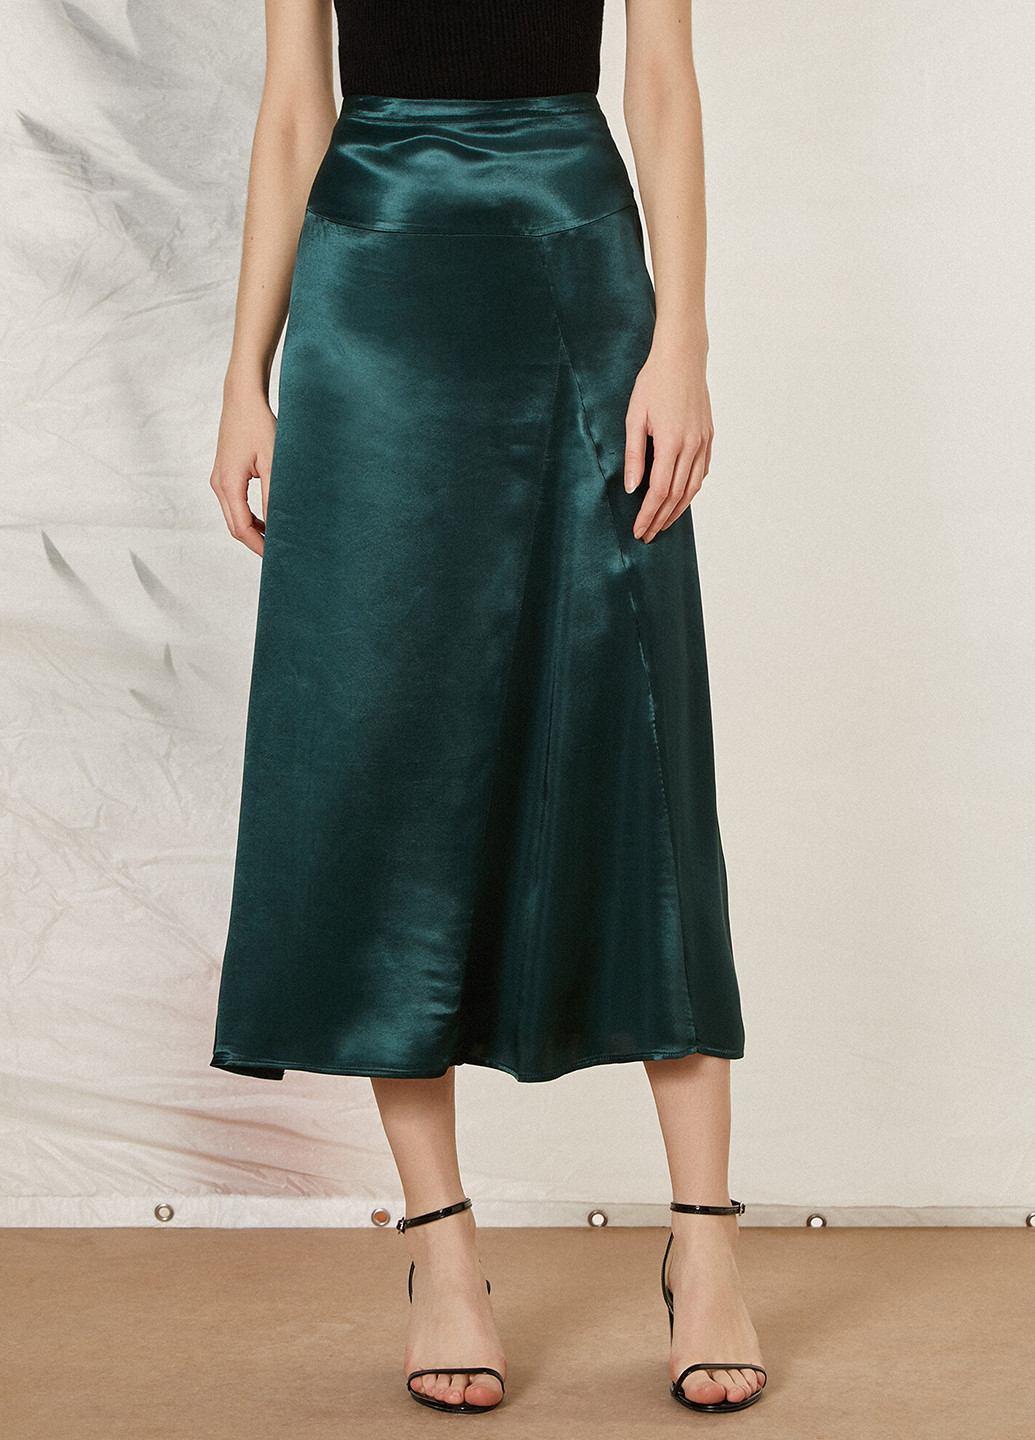 Темно-зеленая кэжуал однотонная юбка KOTON